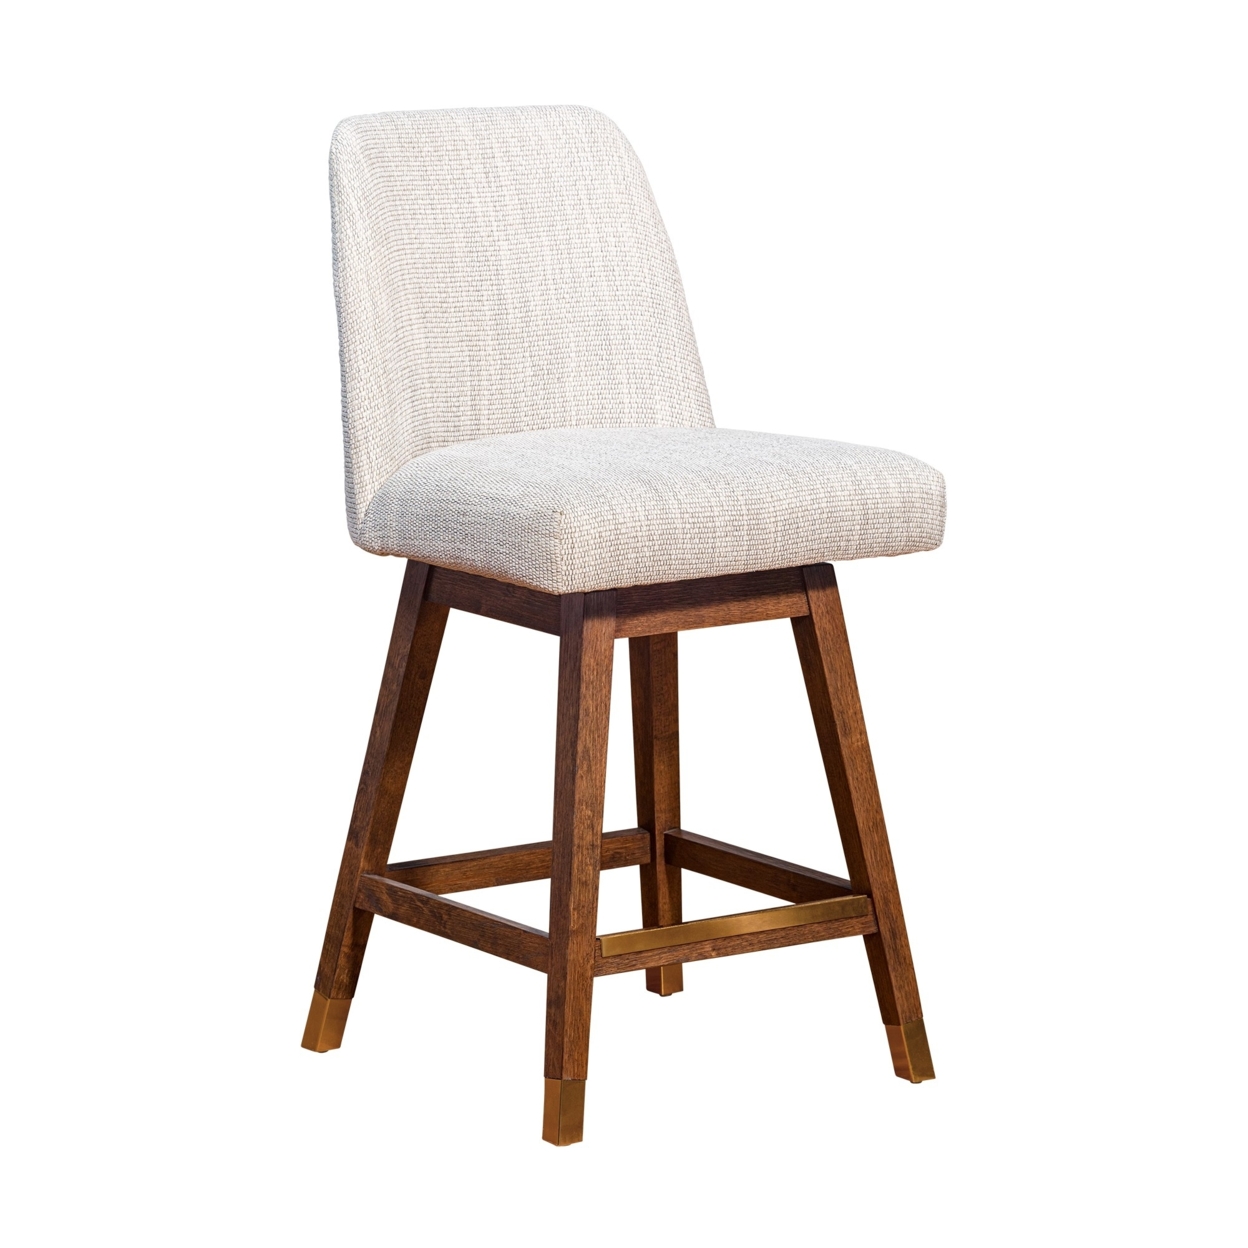 Lara 26 Inch Swivel Counter Stool Chair, Beige Polyester, Brown Wood Legs- Saltoro Sherpi